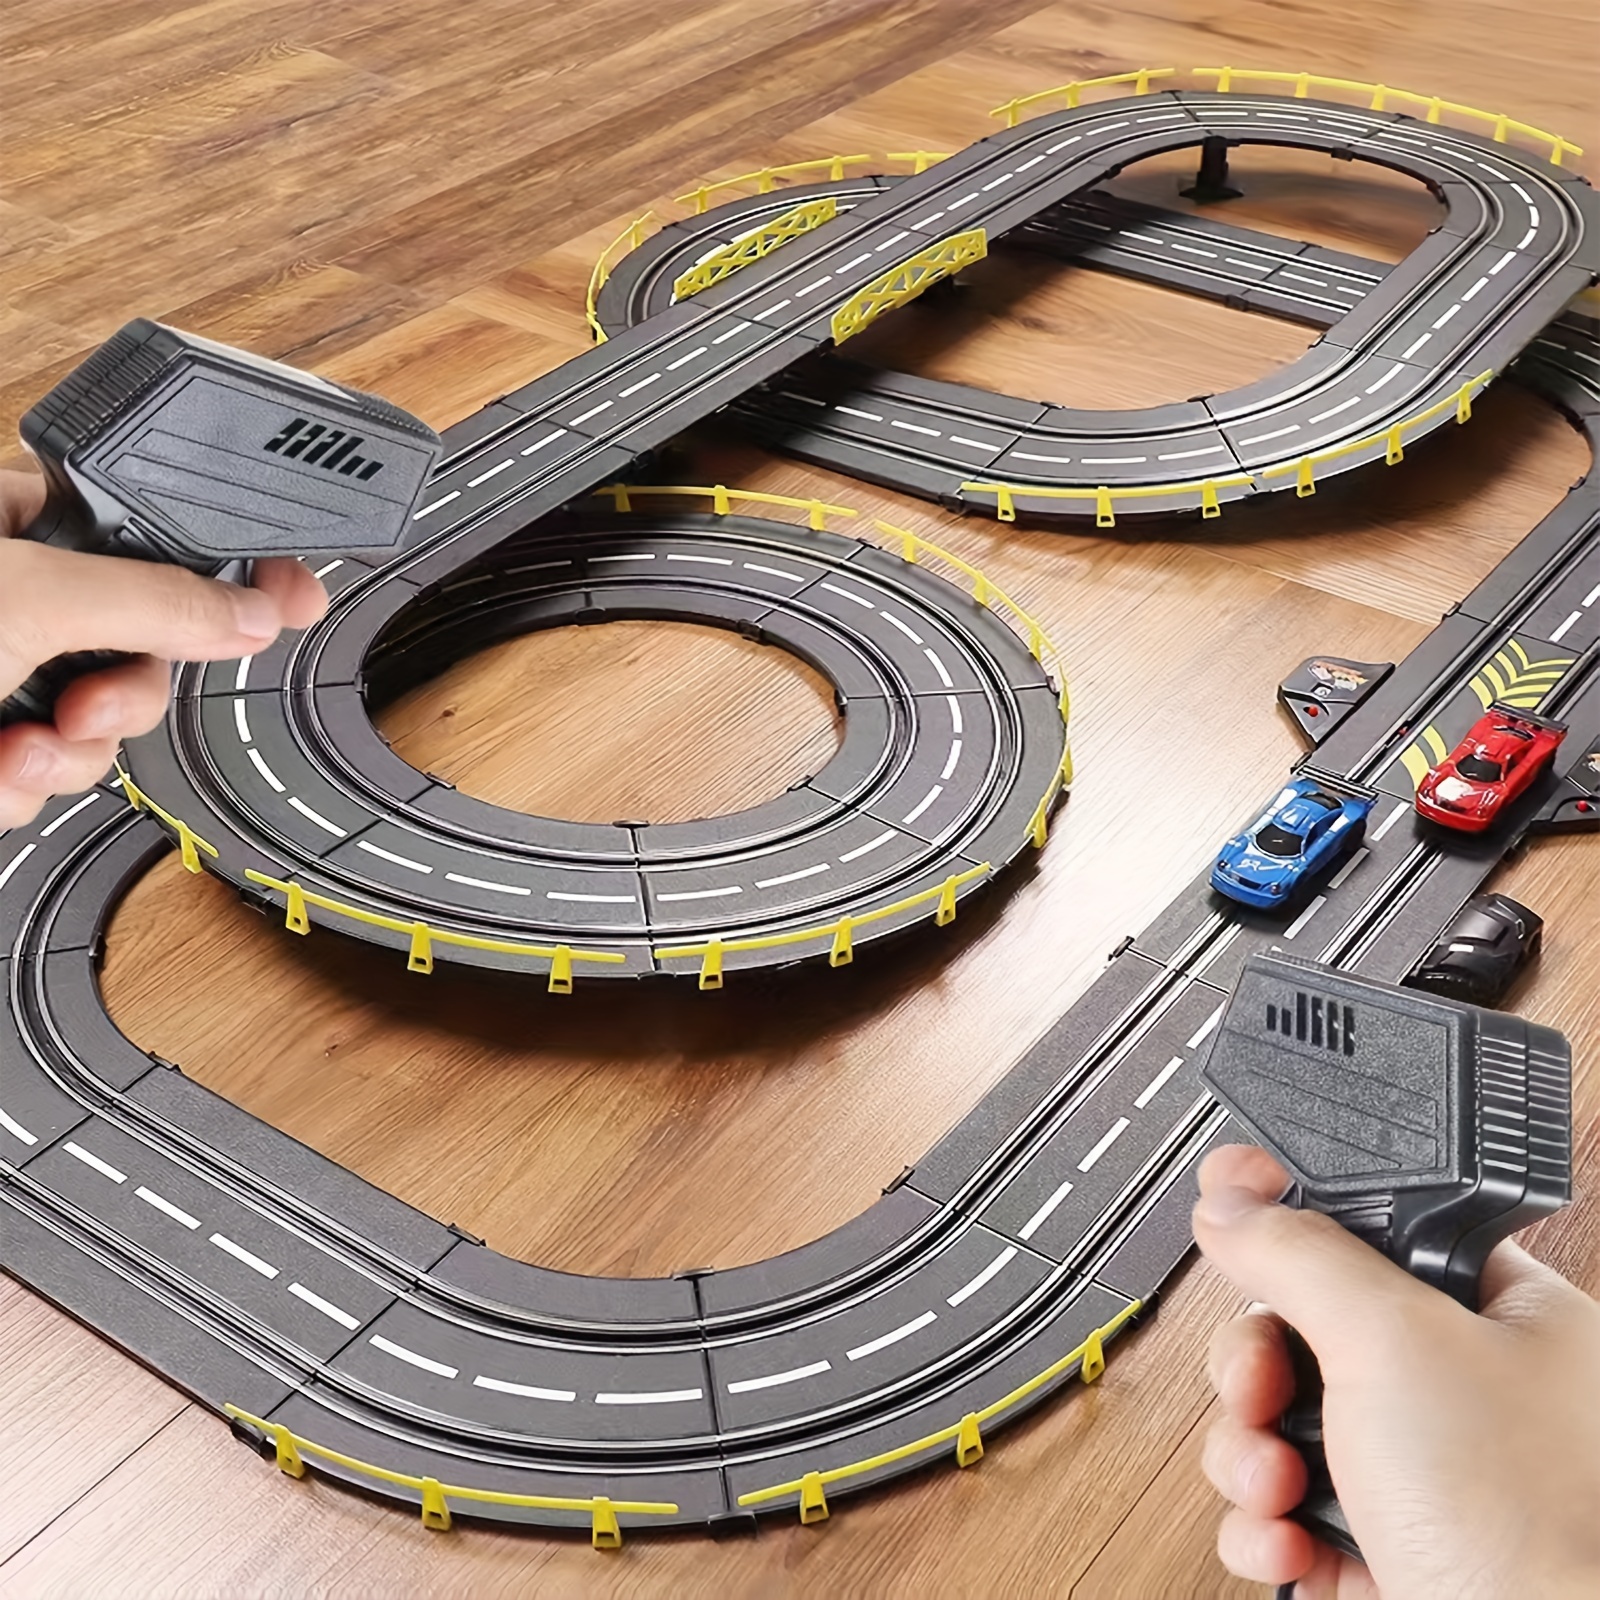 Assembled Race Track Toy Car Electric Slot Train Rail Speed Tracks